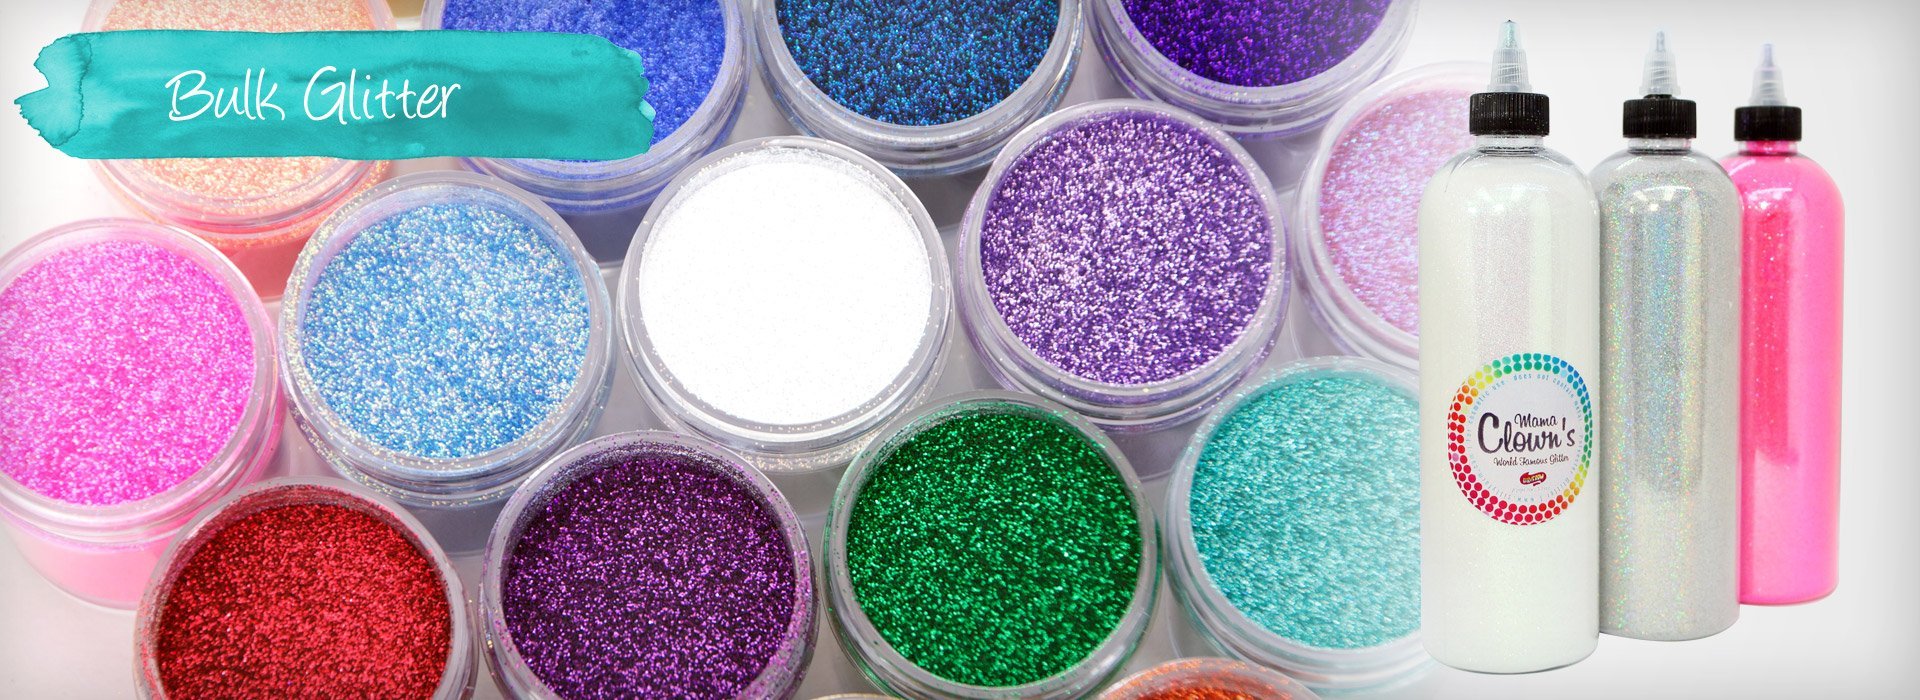 Glitter My World Brand Bulk Glitters - Craft Glitter